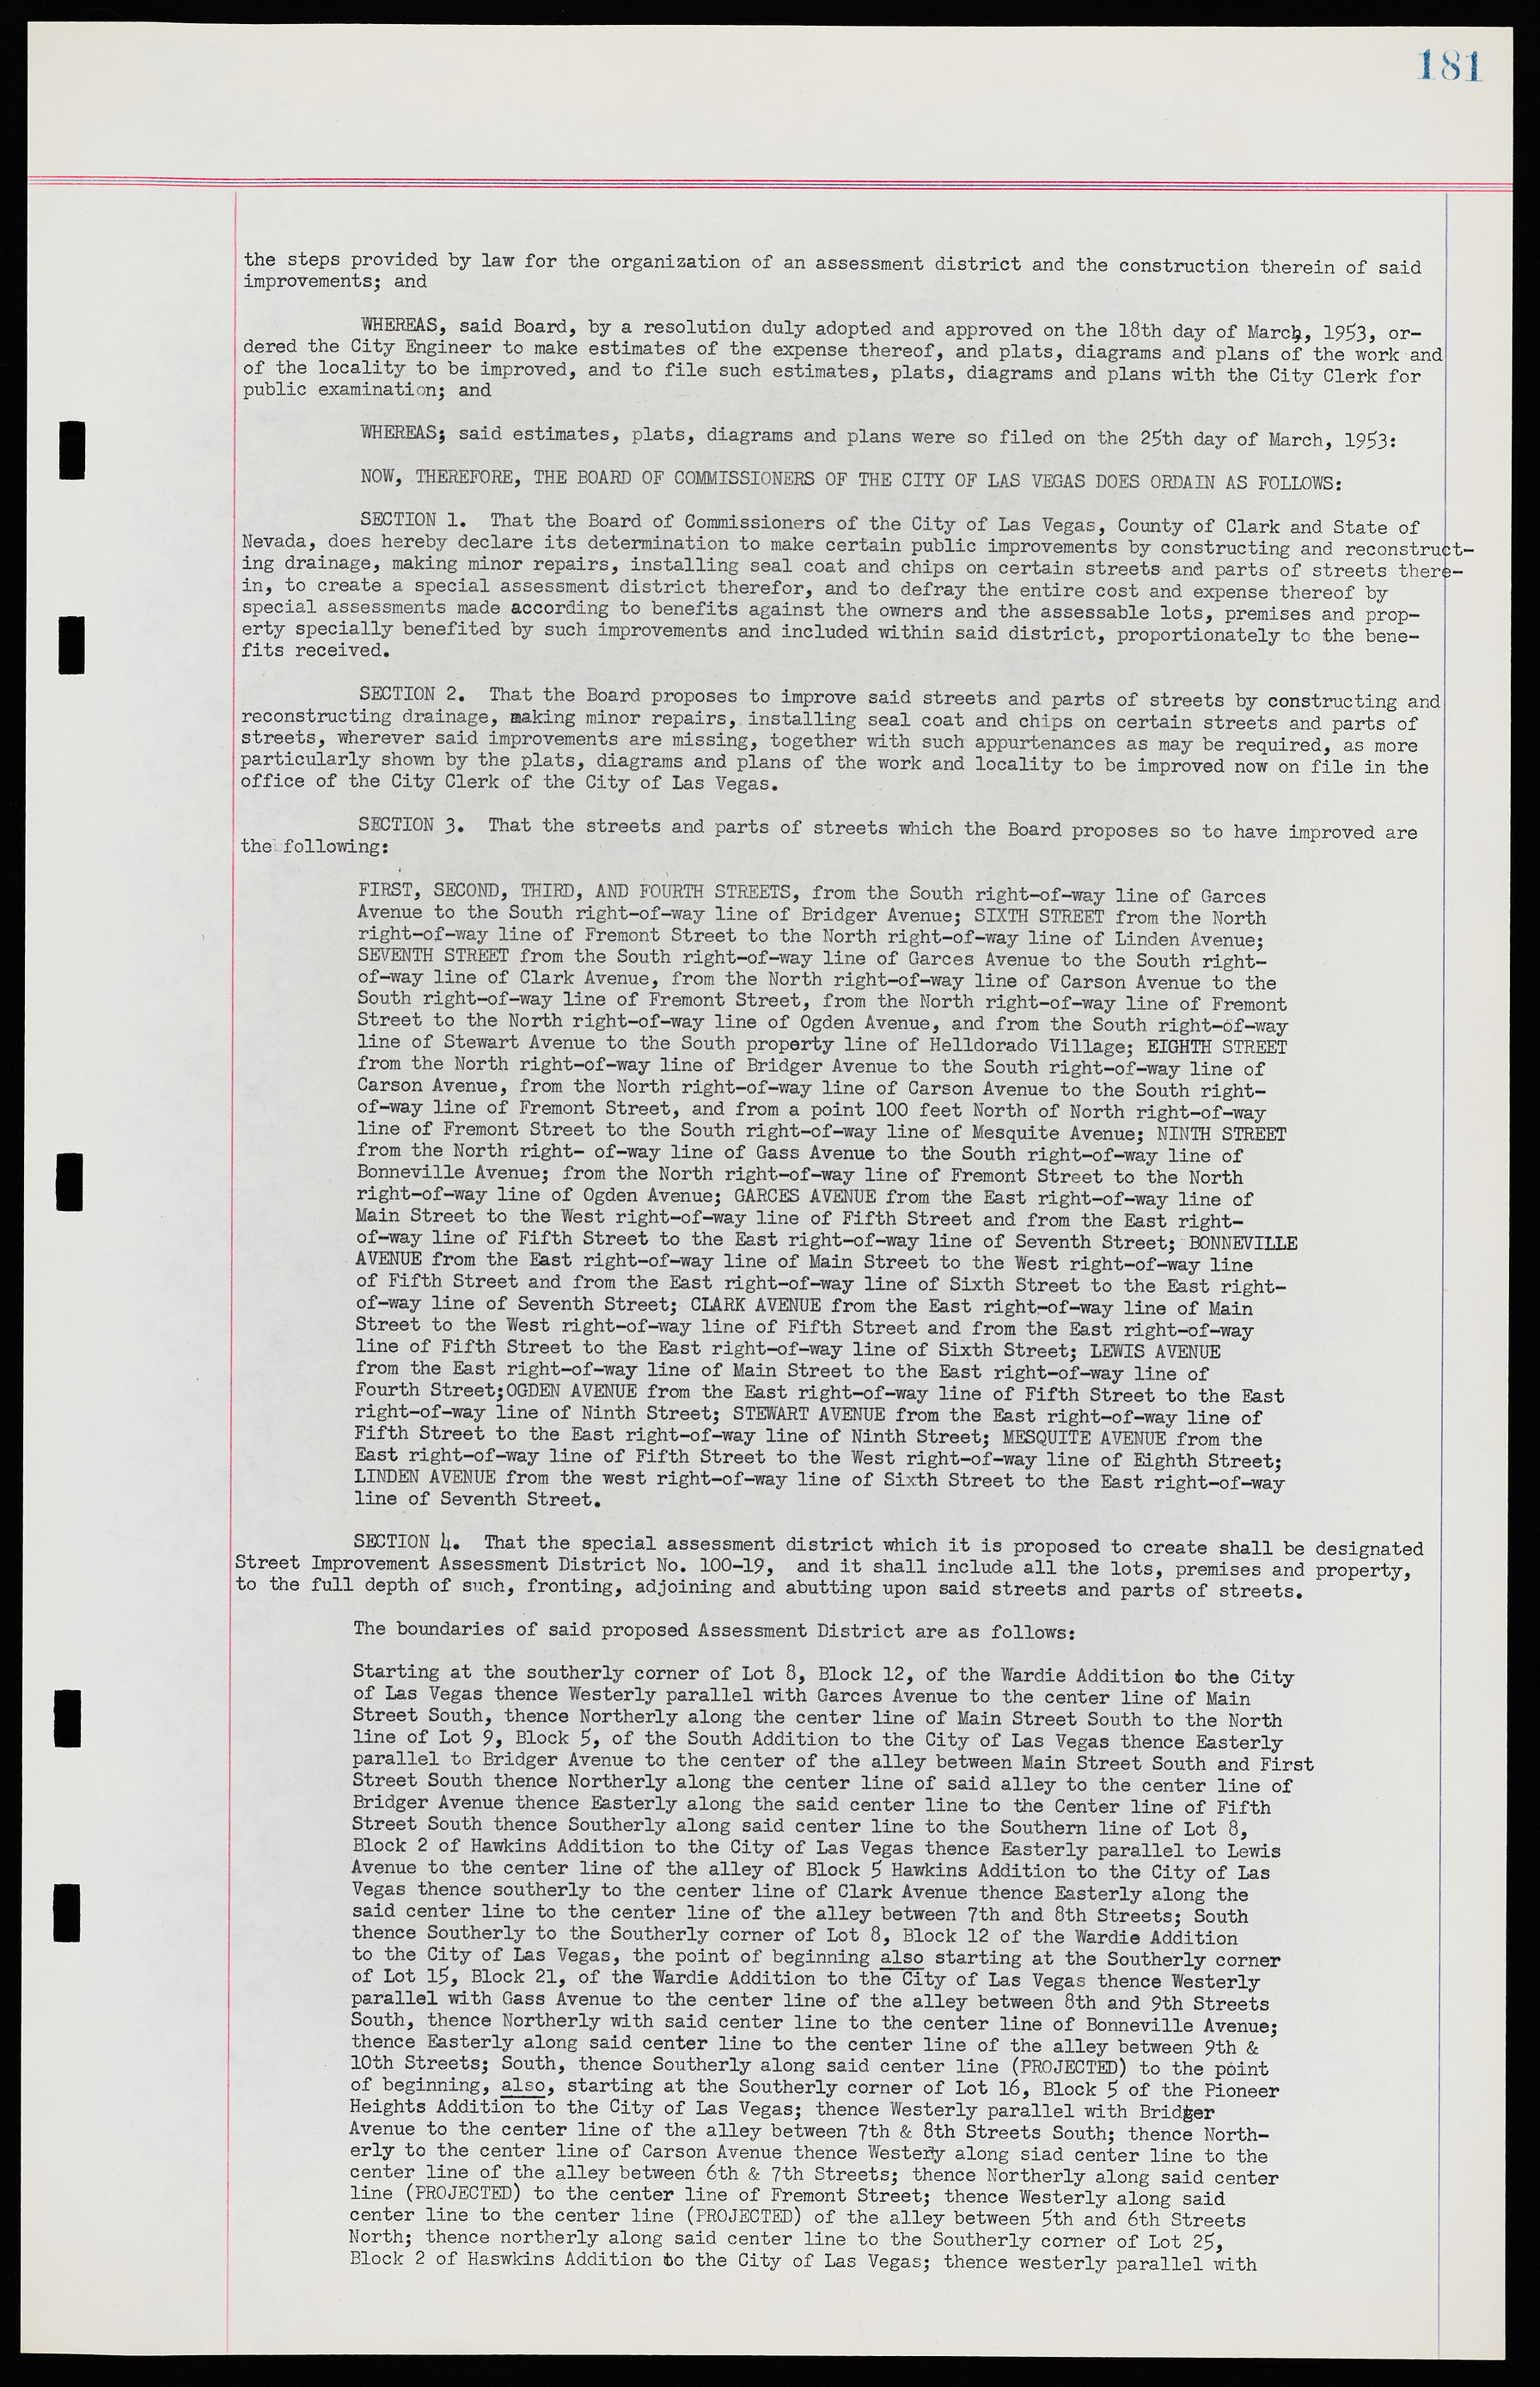 Las Vegas City Ordinances, November 13, 1950 to August 6, 1958, lvc000015-189